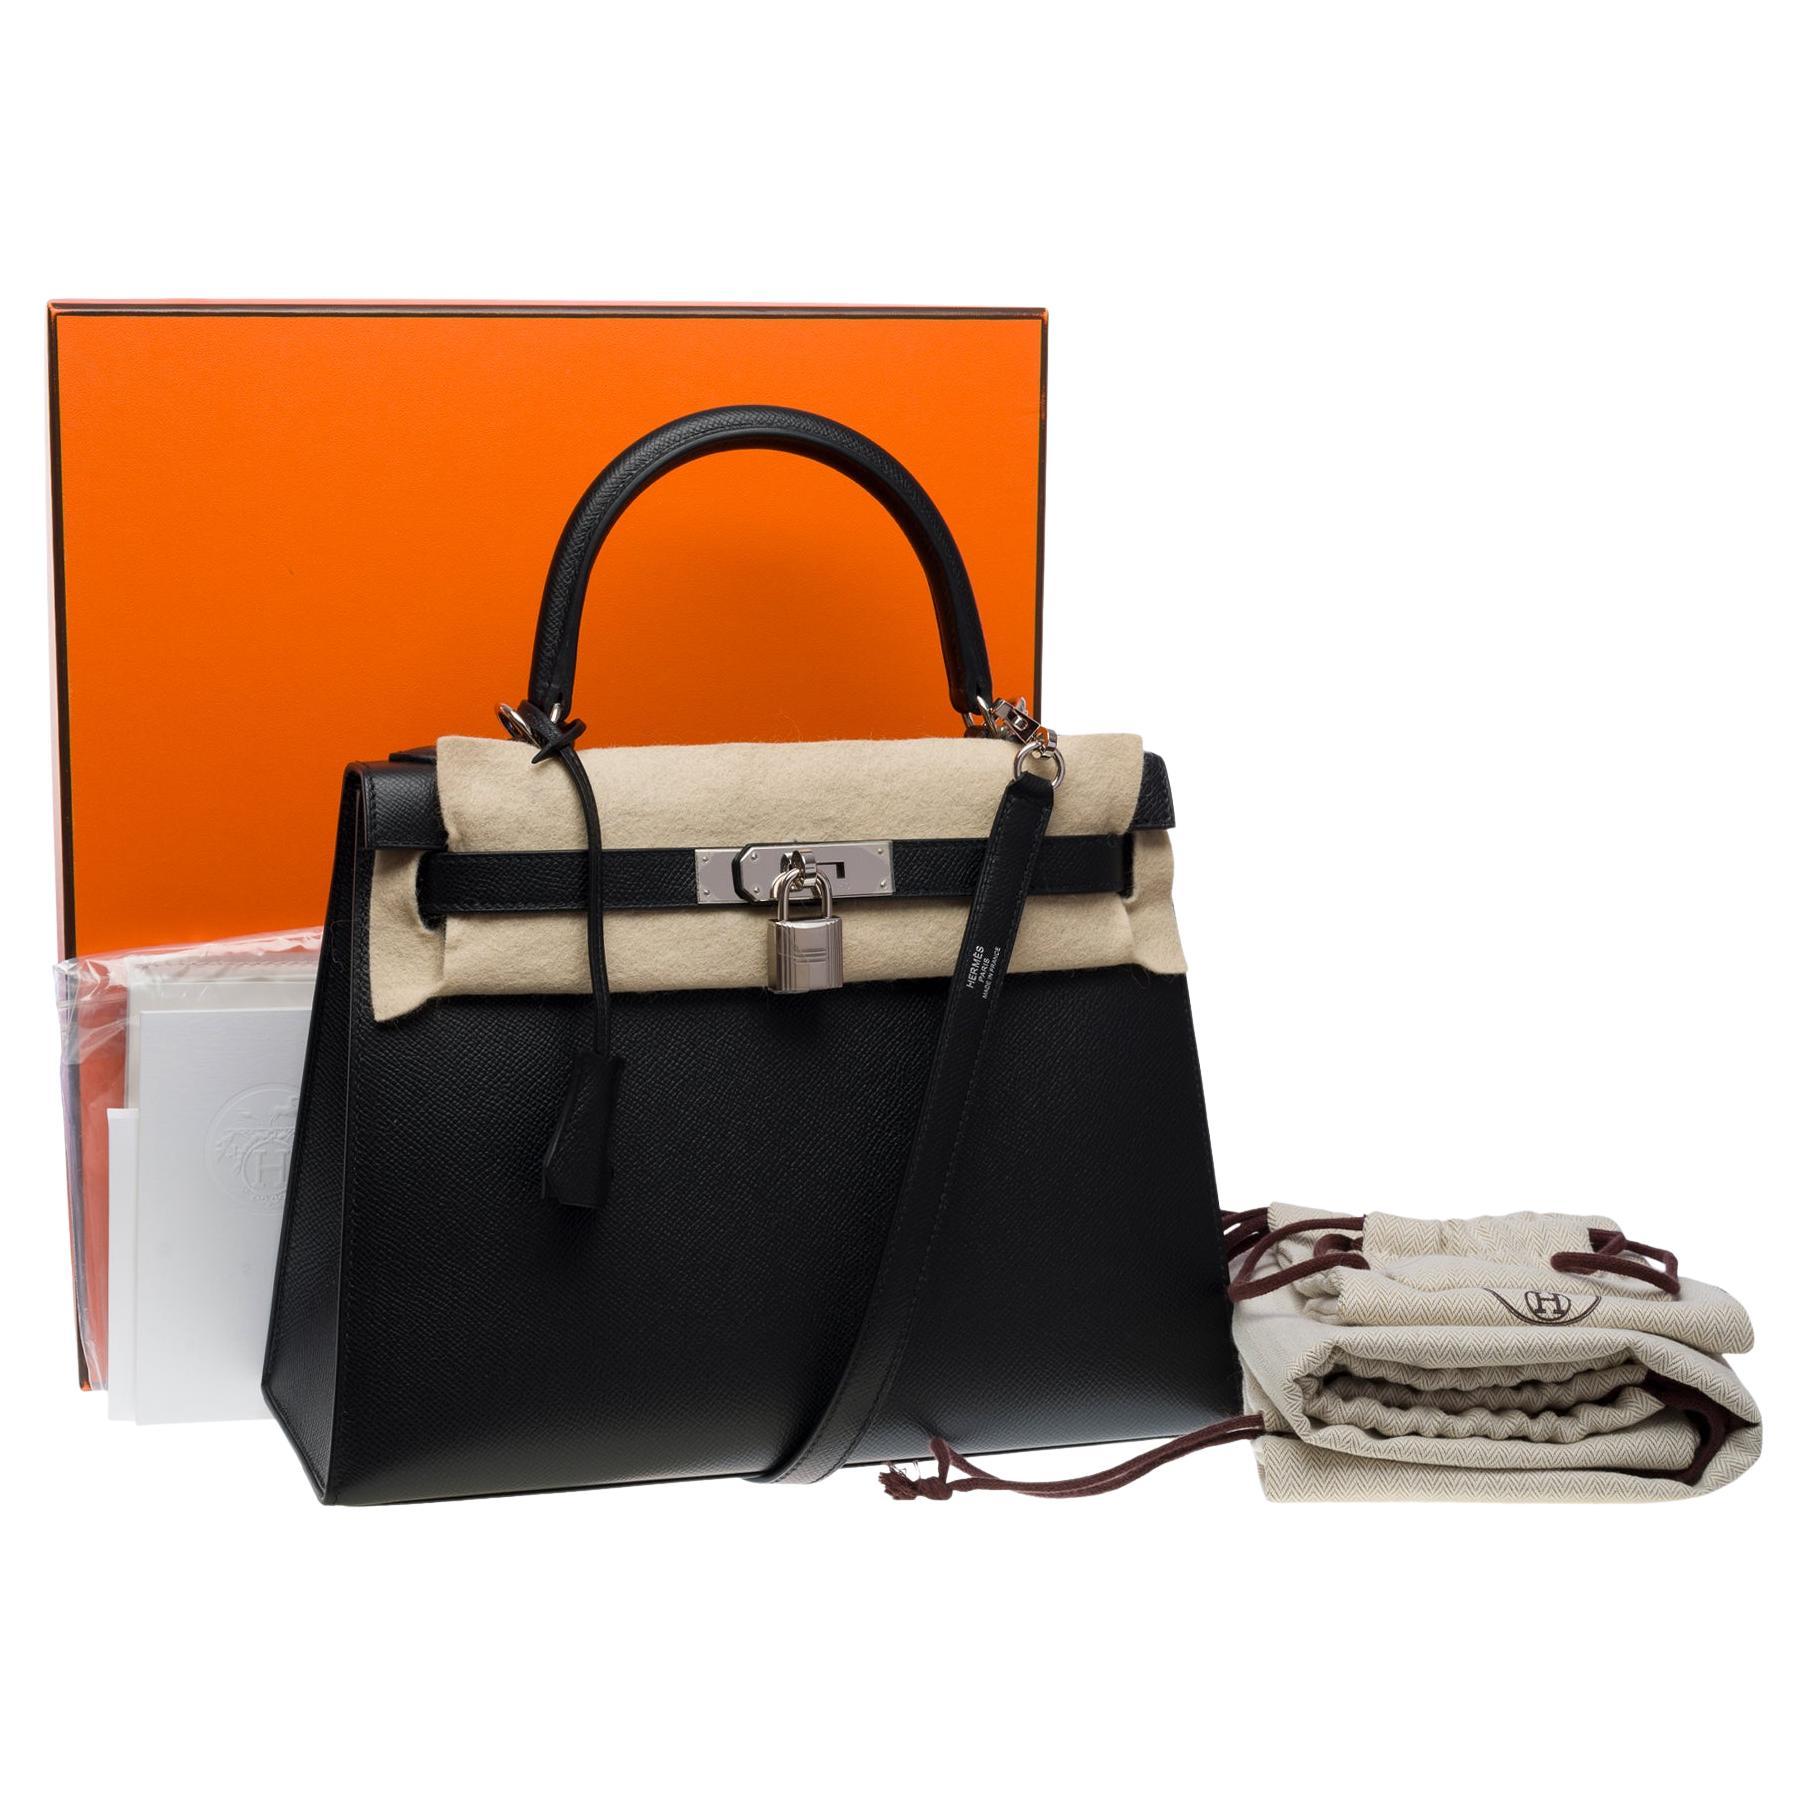 New Hermès Kelly 28 sellier handbag strap in black Epsom leather, SHW